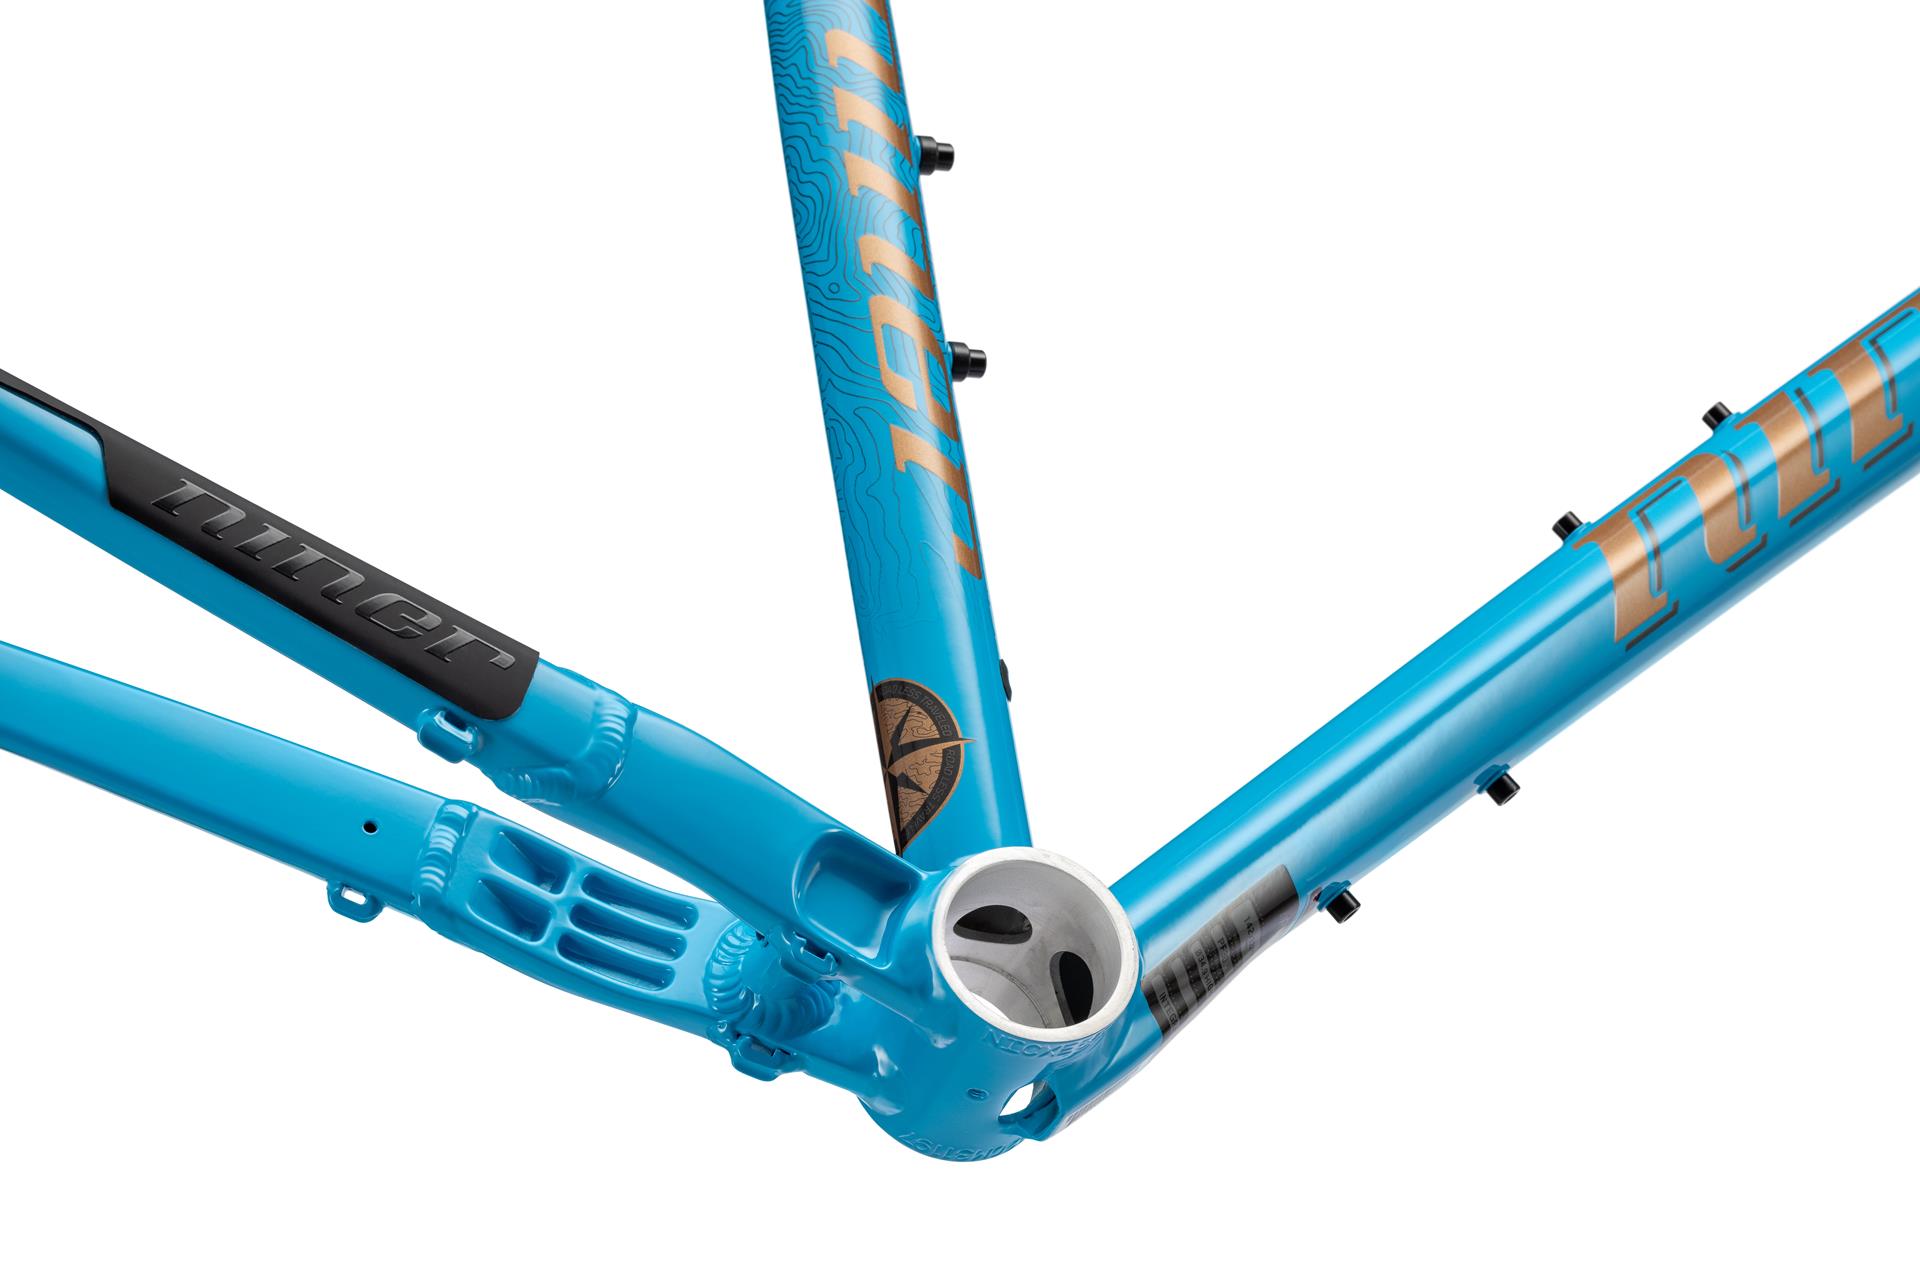 Niner RLT 2-star bike, Grey/Blue, 53